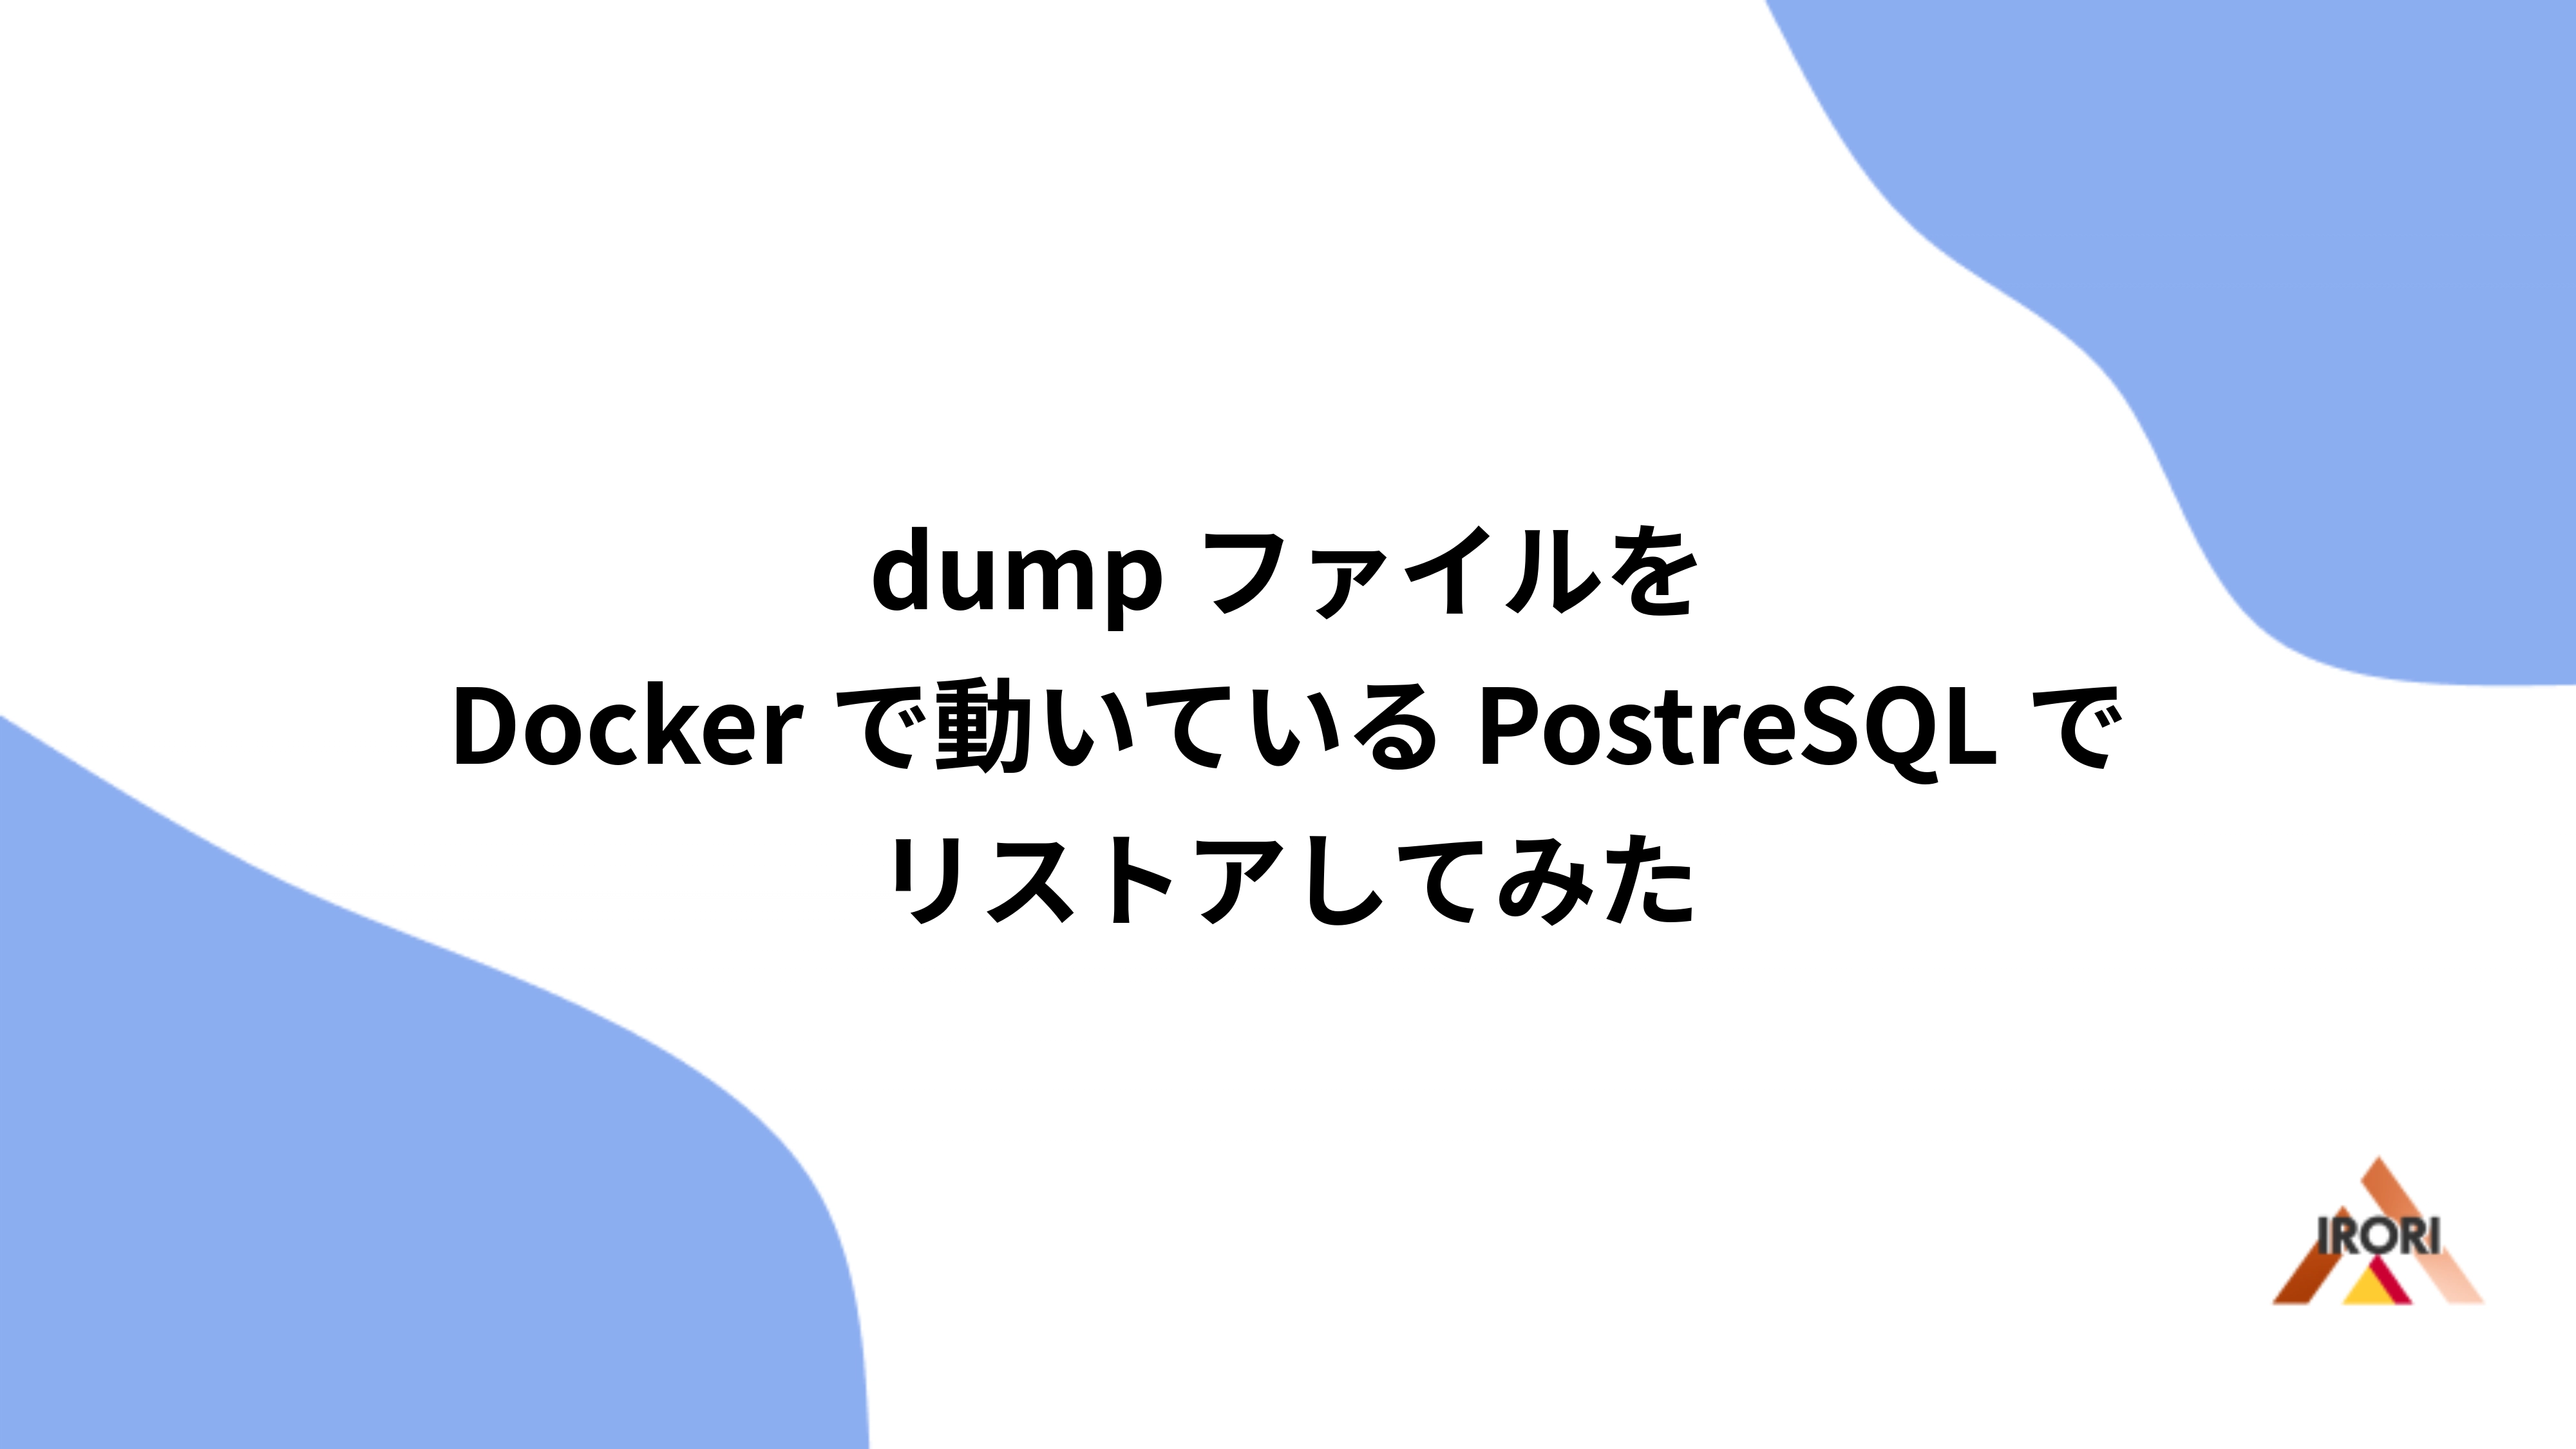 dumpファイルをDockerで動いているPostreSQLでリストアしてみた